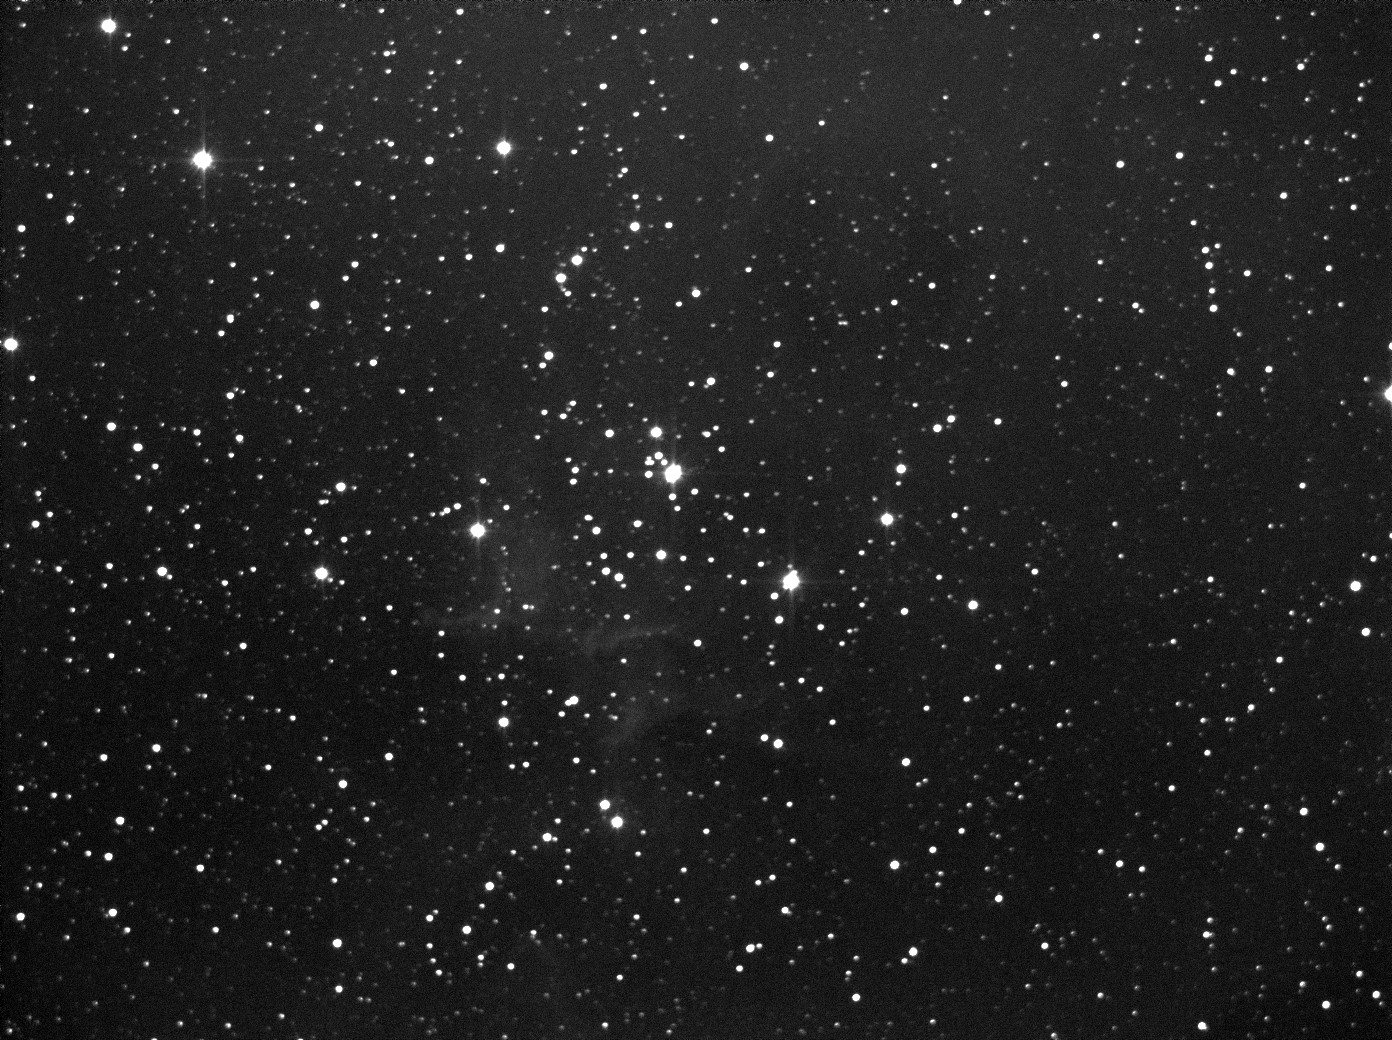 Hearth nebula_19x60s.jpg